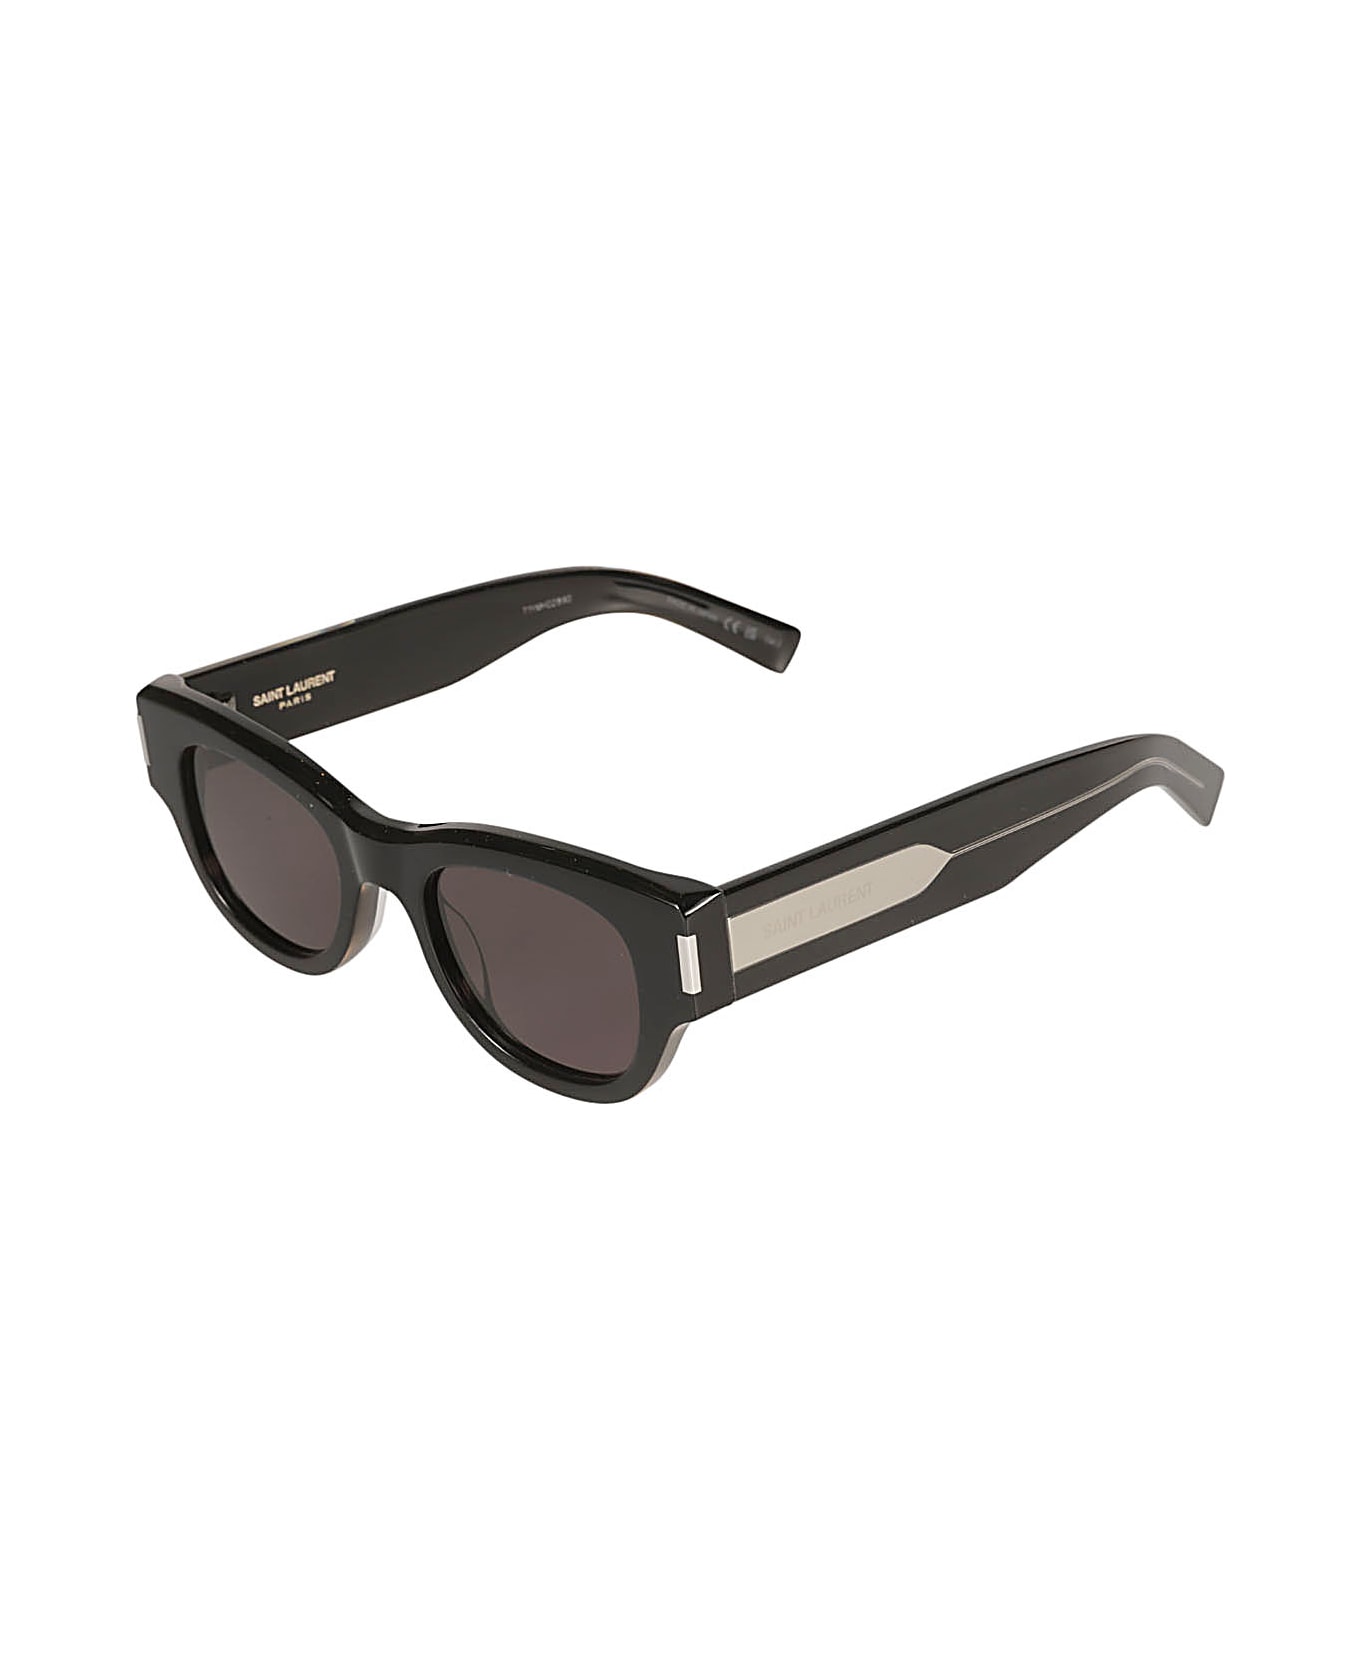 Saint Laurent Eyewear Round Frame Sunglasses - Black/Crystal/Grey